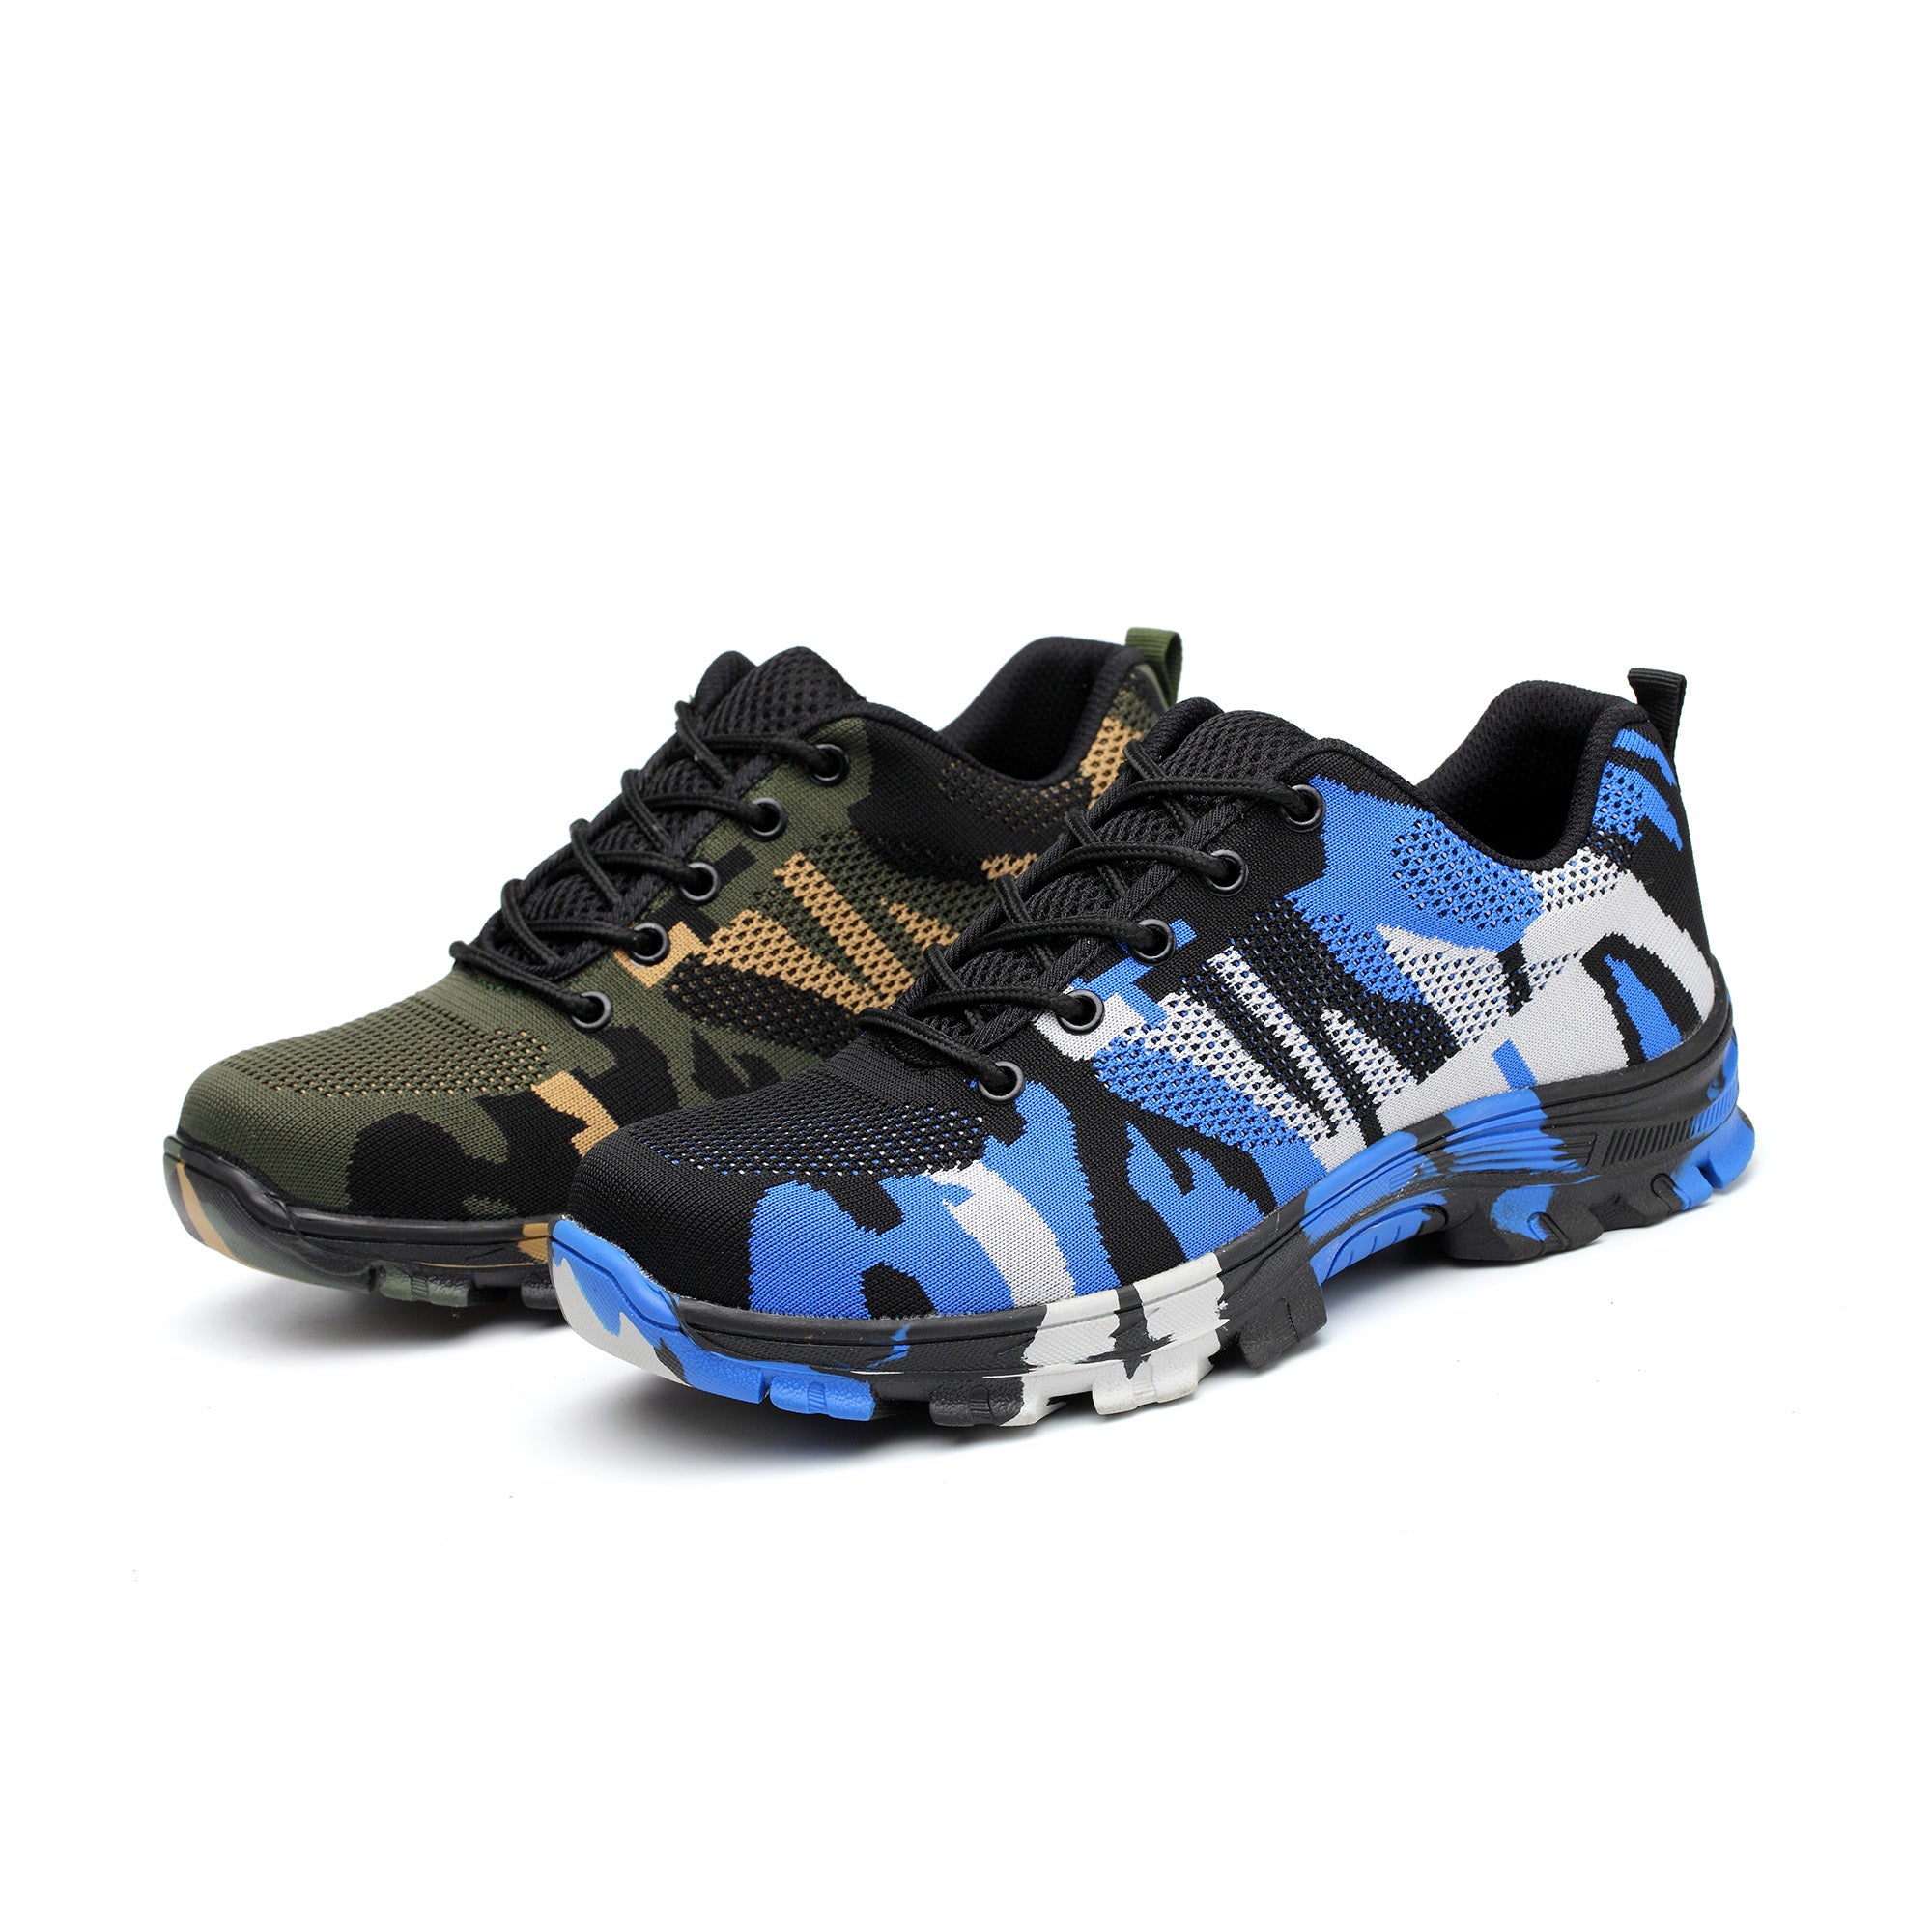 YSK 526: Camo Steel Toe Fashion Shoes (Blue/Green) - YSK (You Should Know) Safety